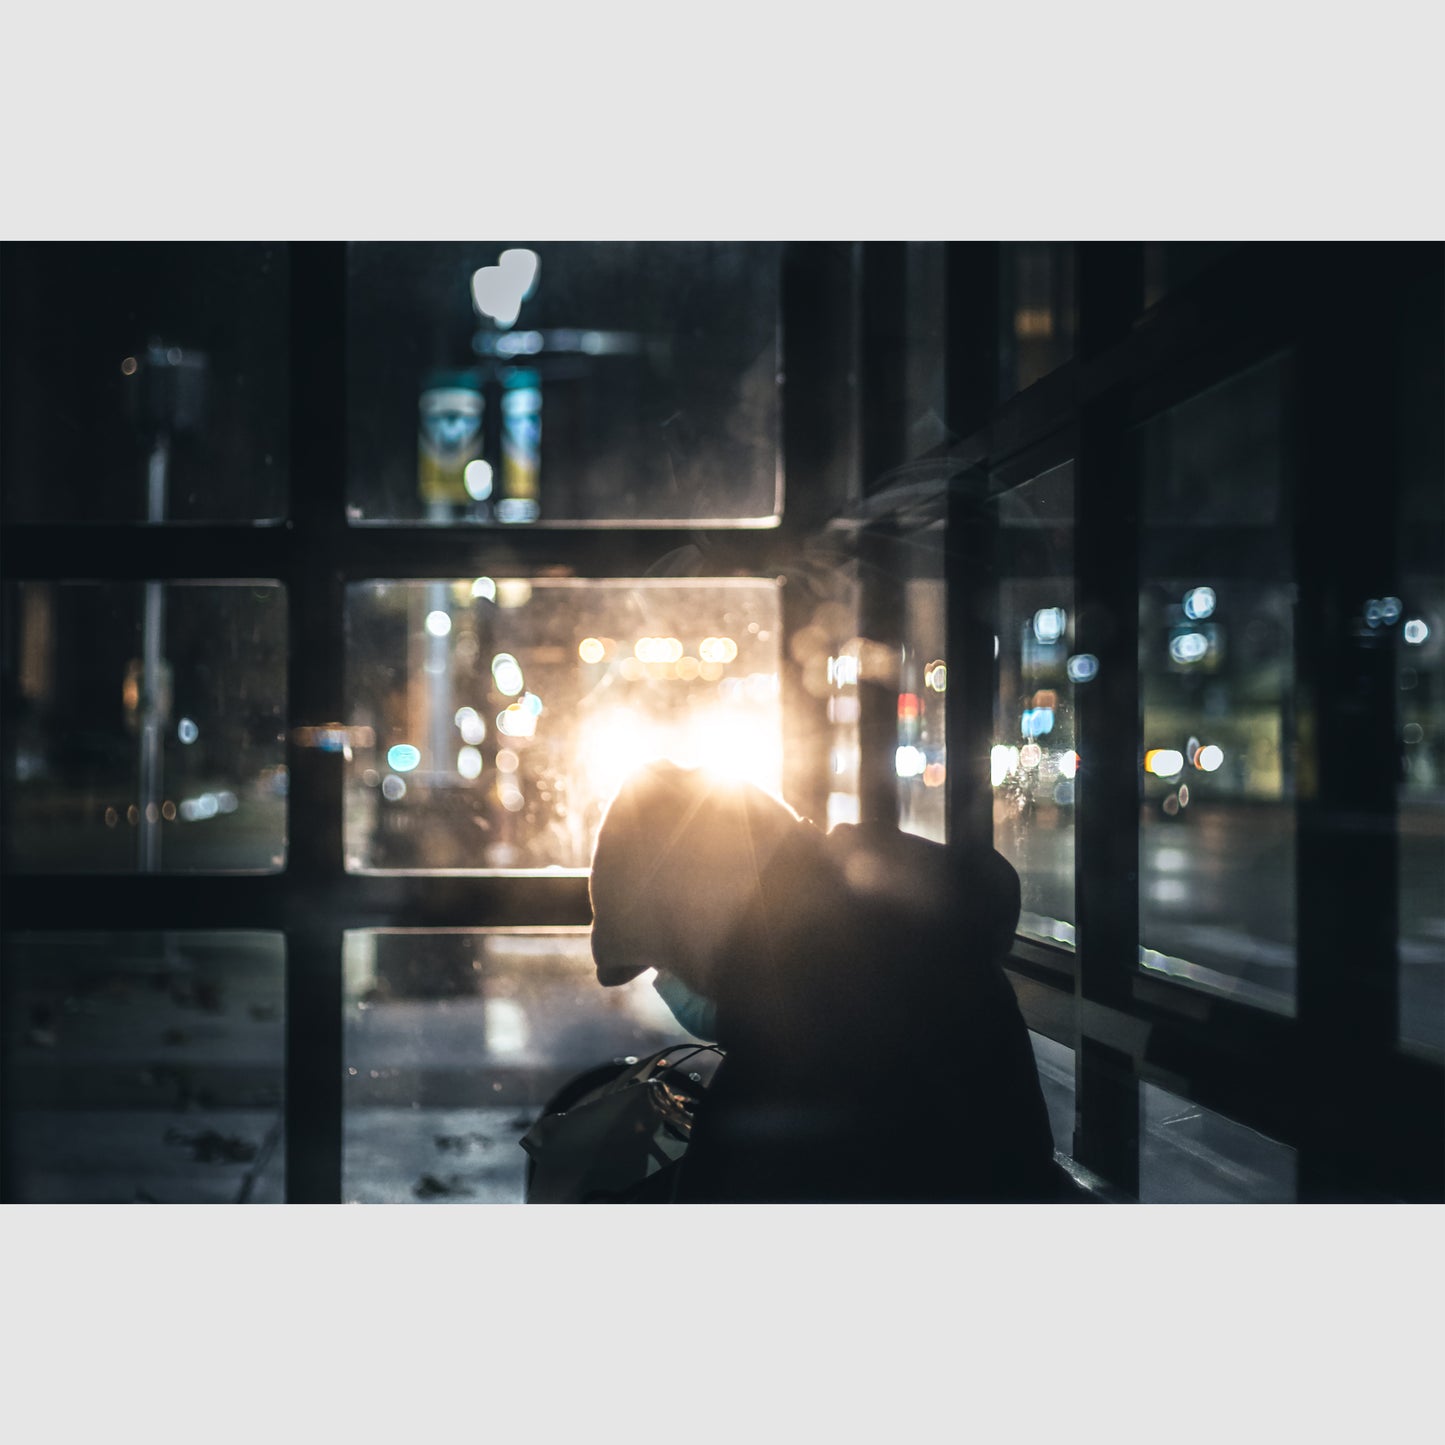 Public Loneliness - Vannopics, Detroit, Horizontal, Night